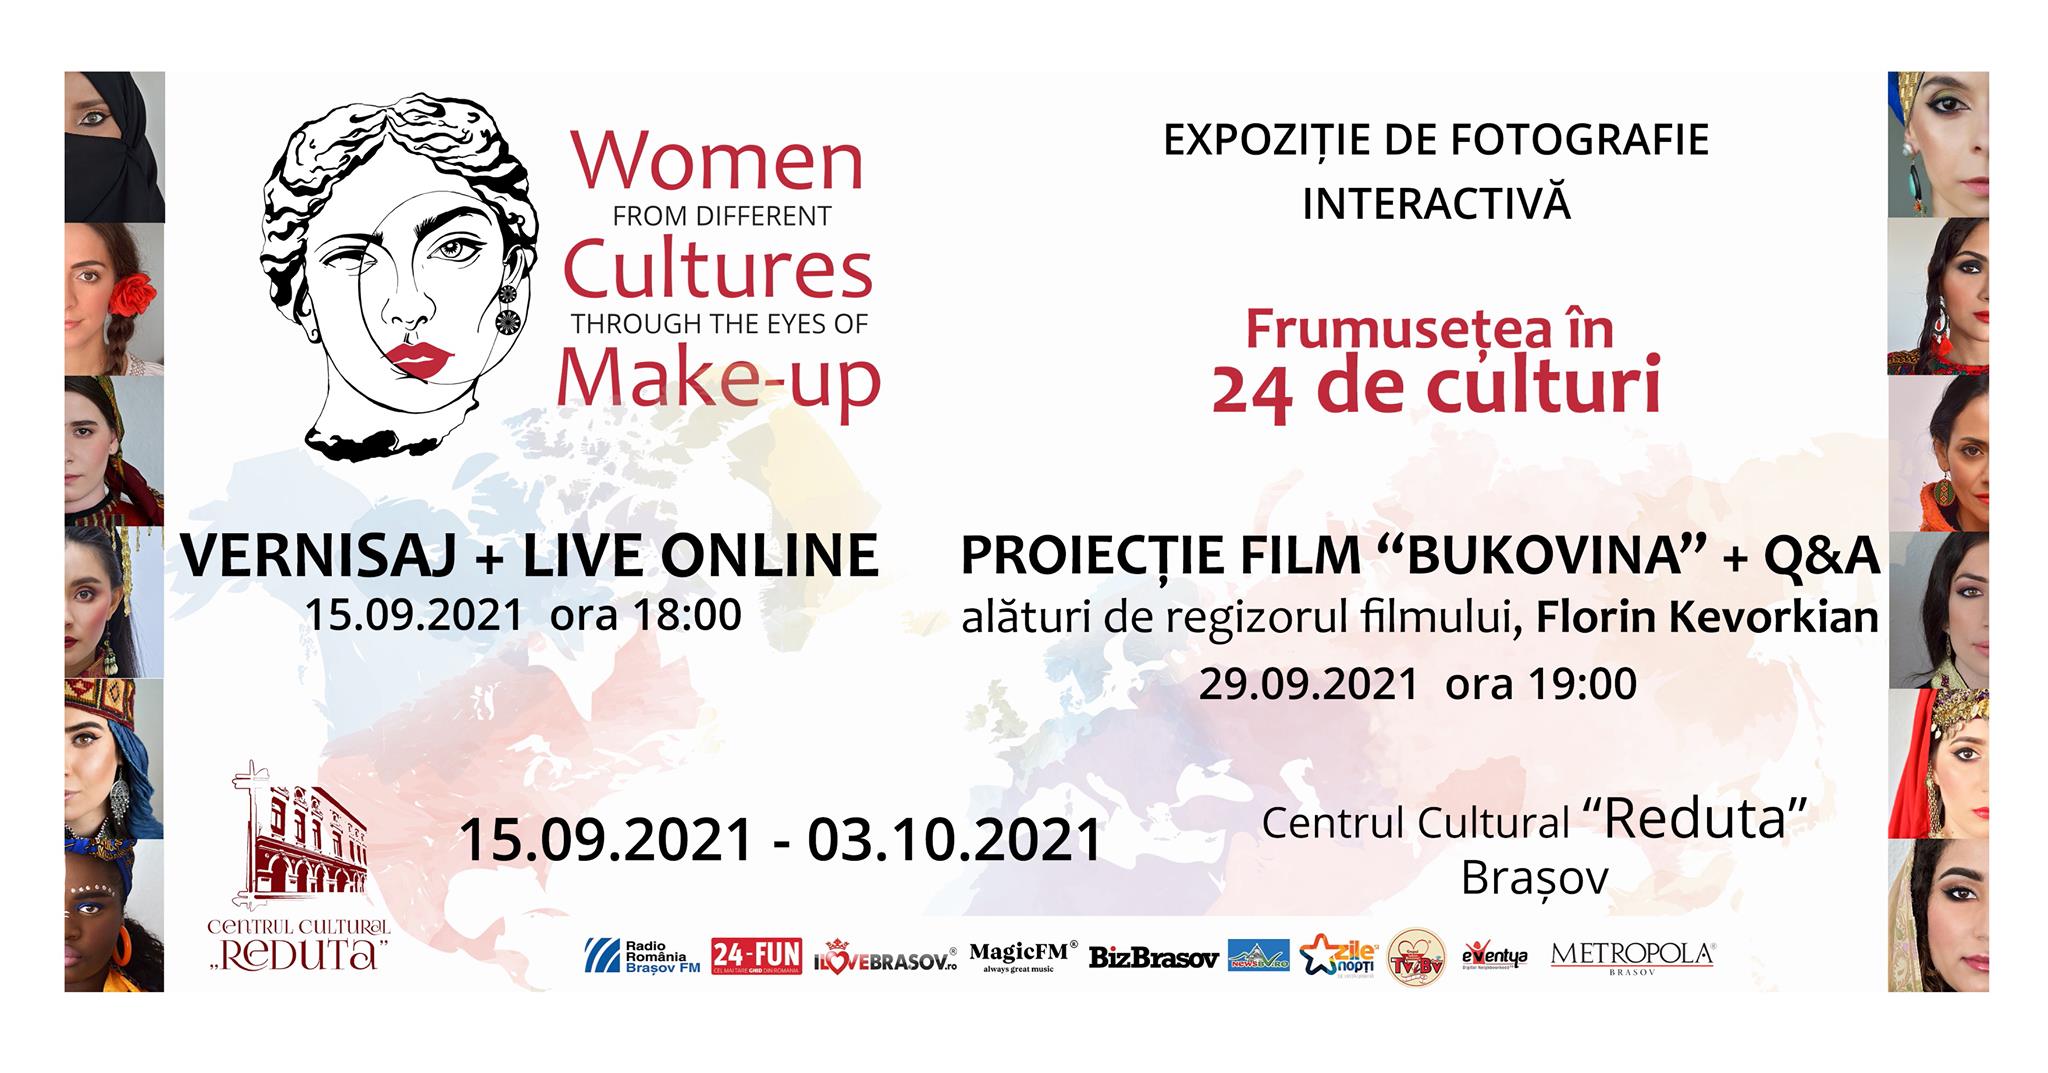 Expoziție de fotografie interactivă – “Women from different cultures through the eyes of make-up” la Centrul Cultural Reduta